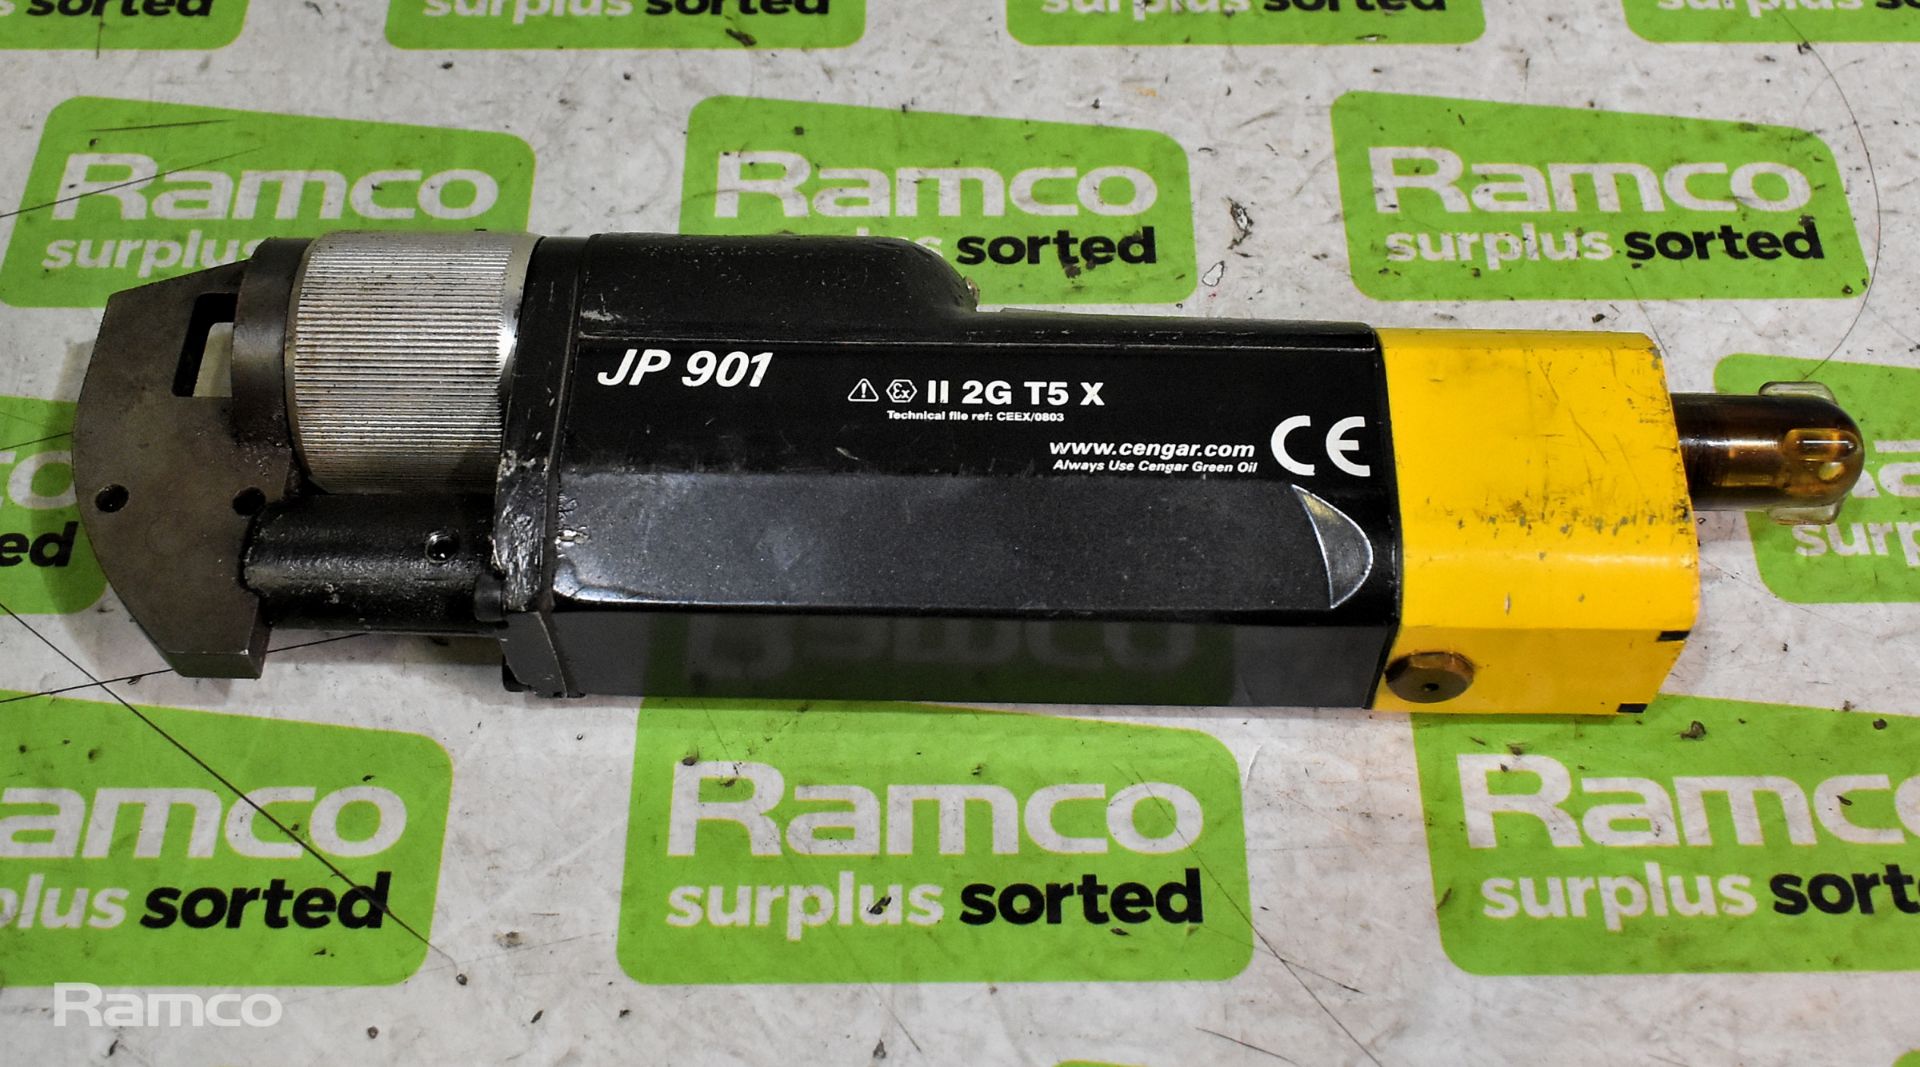 Cengar JP901 pneumatic reciprocating saw in plastic case - Image 5 of 10